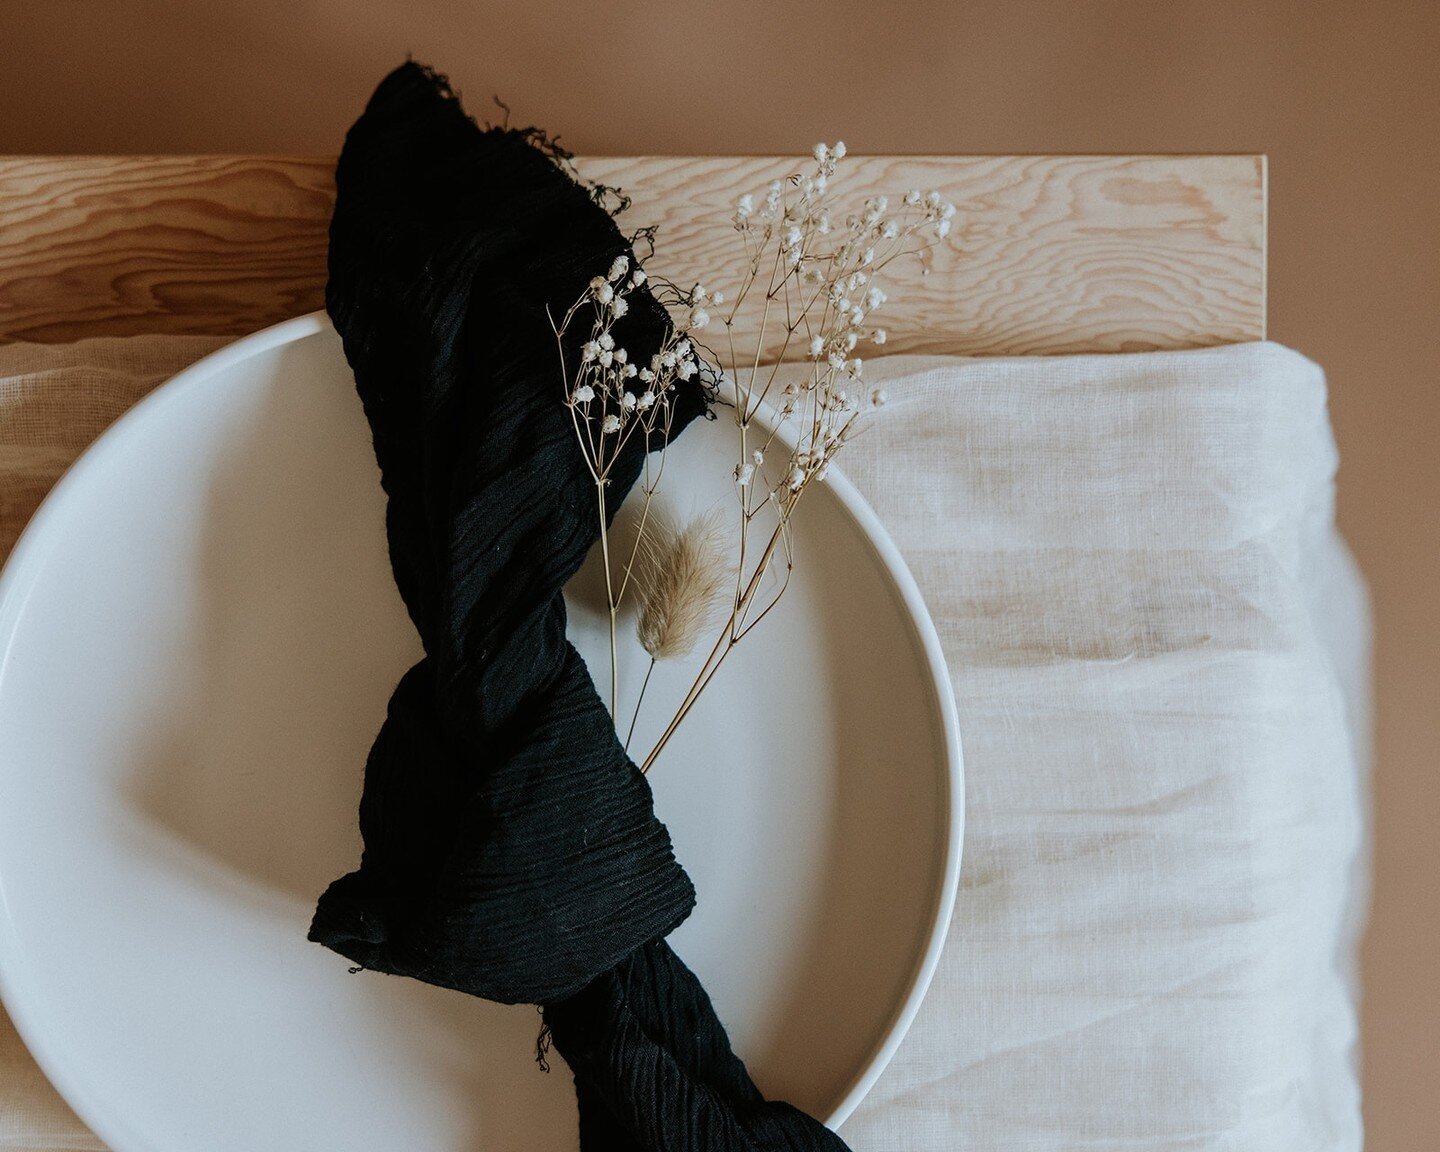 Sleek. Simple. Black linens 🖤

#eventrentals #eventdesign #eventdecor #decor #decorideas #eventinspo  #weddinginspo #dinnerparty #tabledecor #tablescape #tablesetting #linens #black #blacklinens